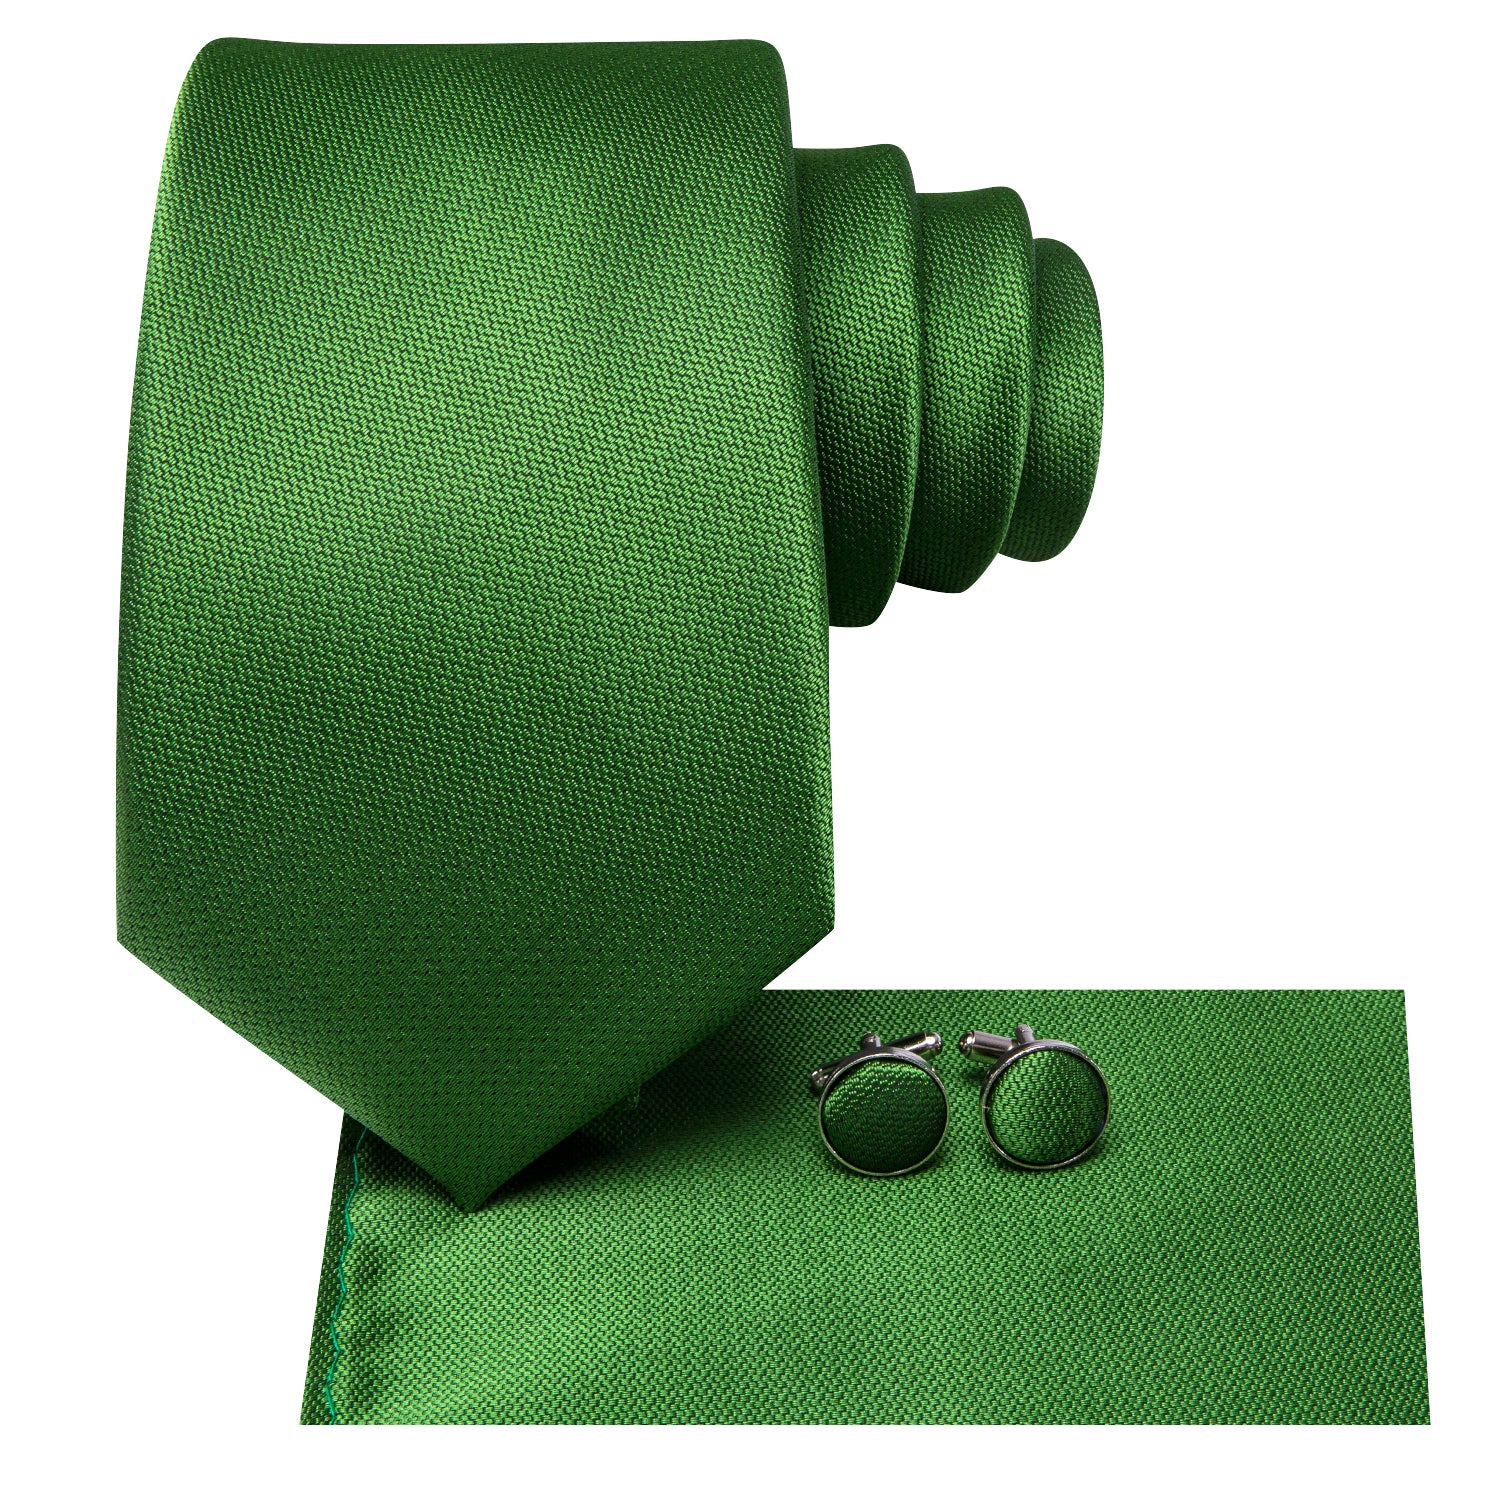 Hi-Tie Emerald Green Solid Men's Tie Pocket Square Cufflinks Set